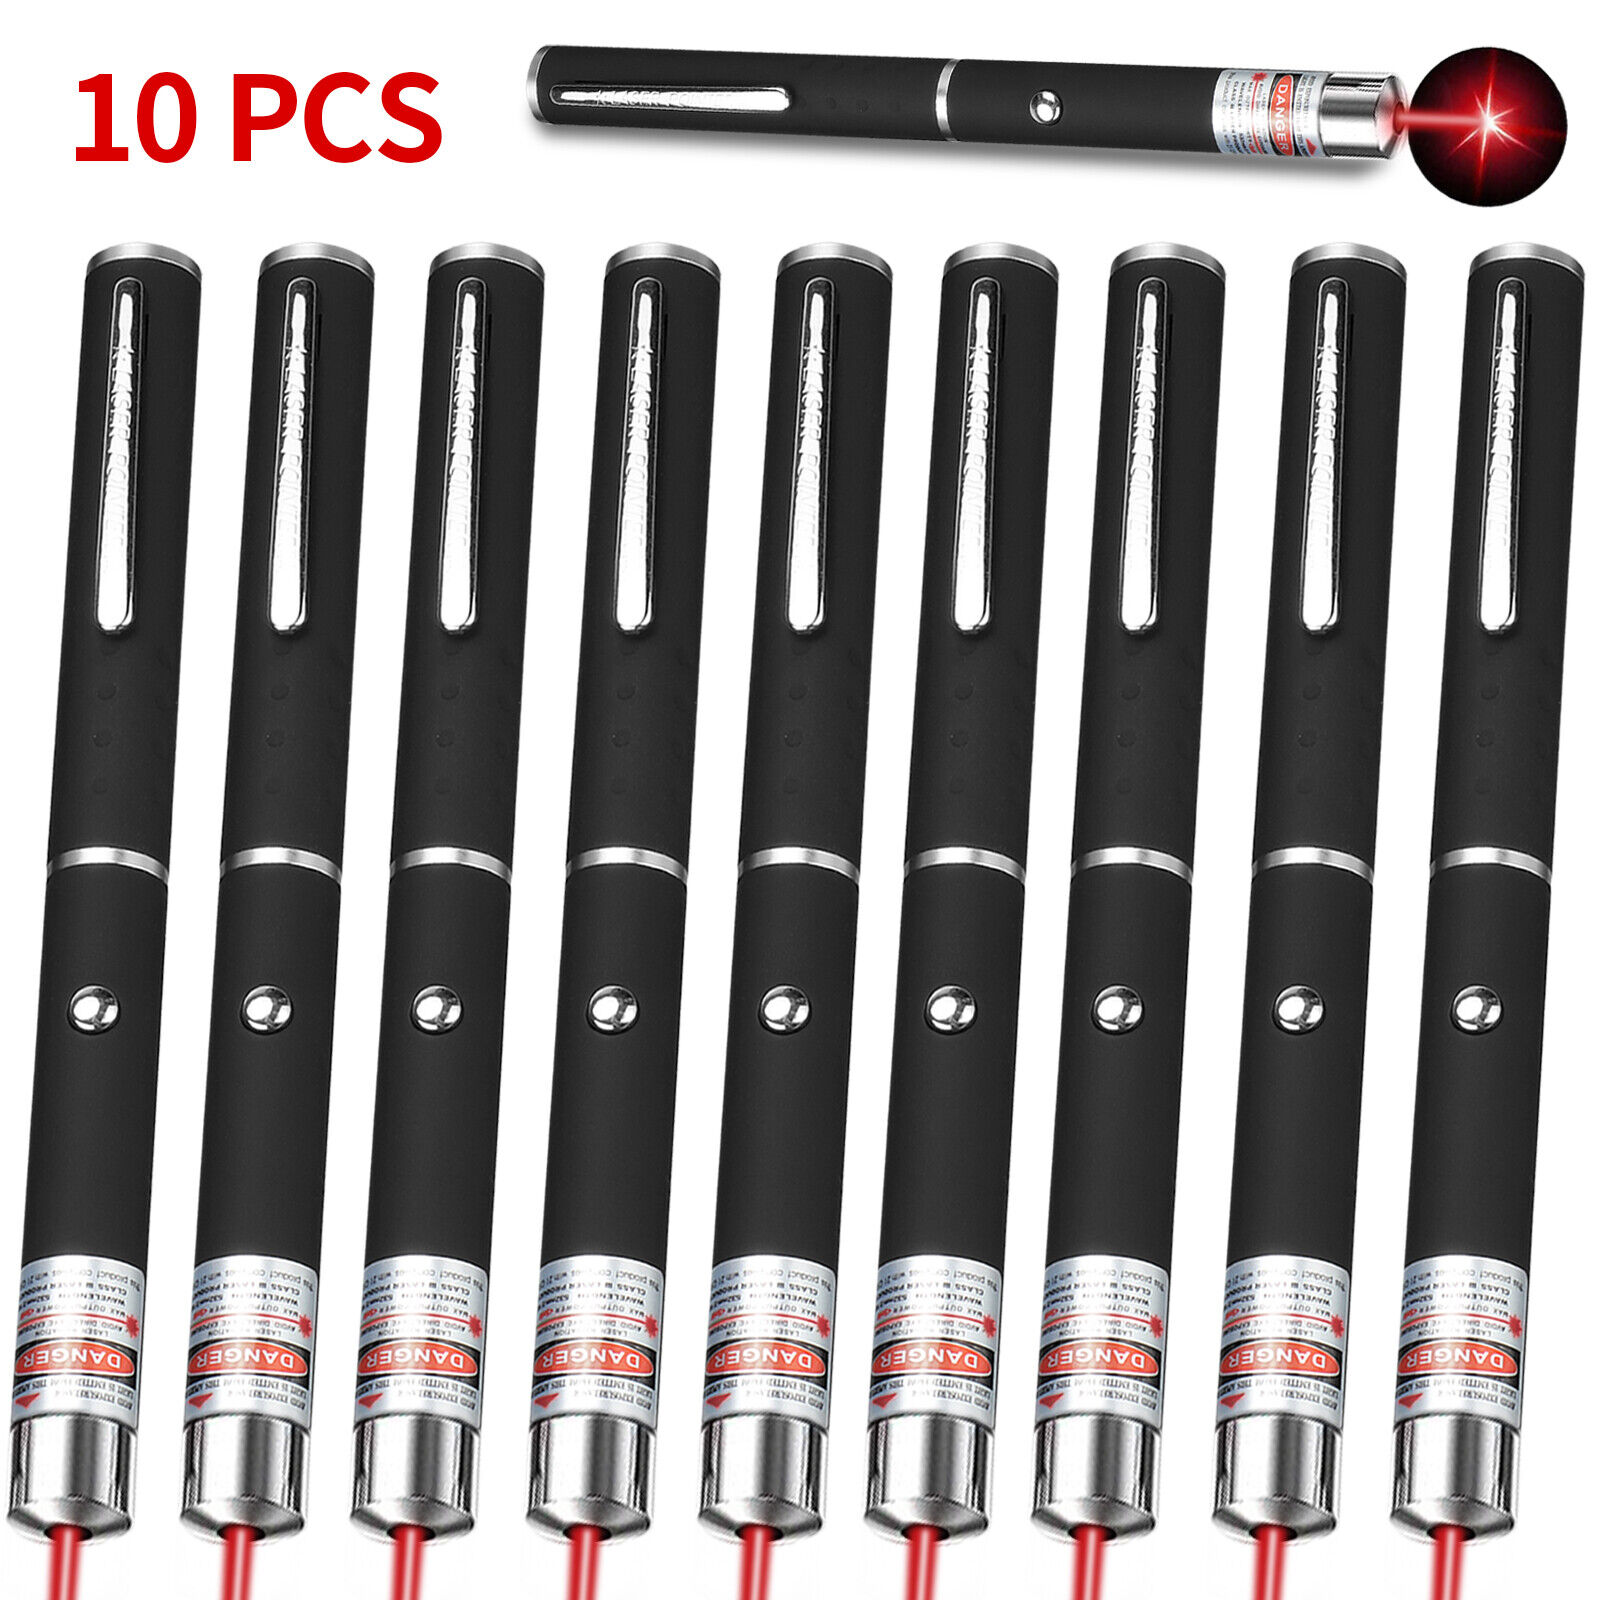 10Pcs 990Miles Red Laser Pointer High Power Visible Beam Light 650nm Lot Sky Wolf Eye Laser Pointer Pen